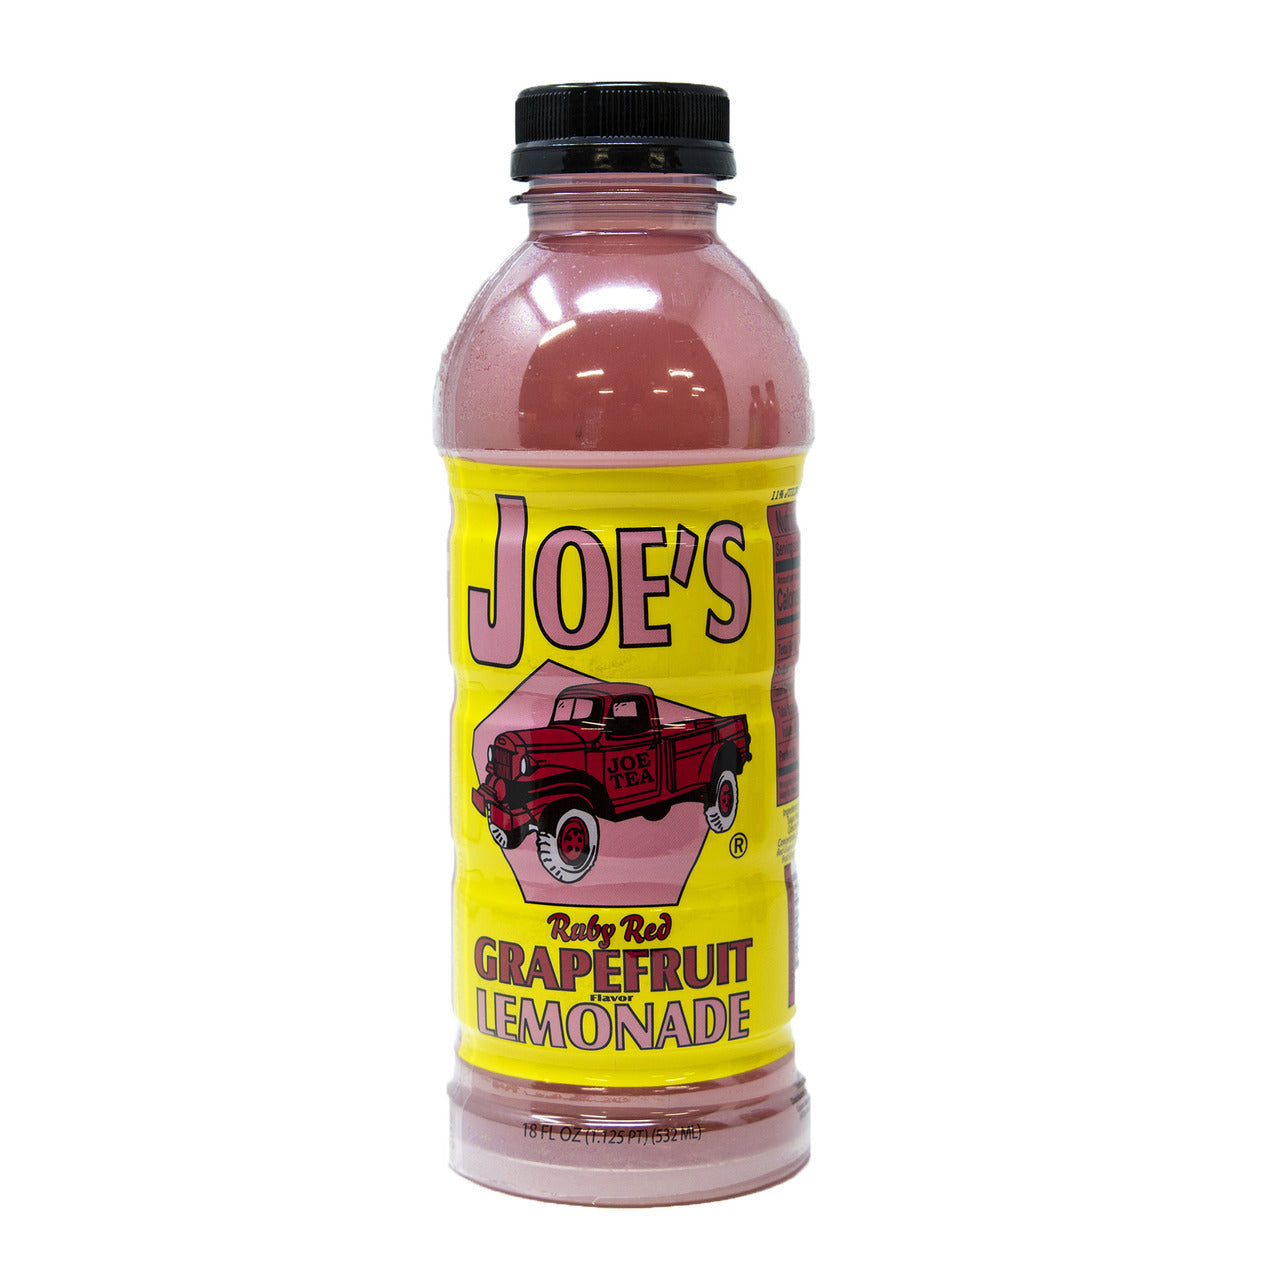 Drinks - Joe's Tea - Ruby Red Grapefruit Lemonade - 18oz.